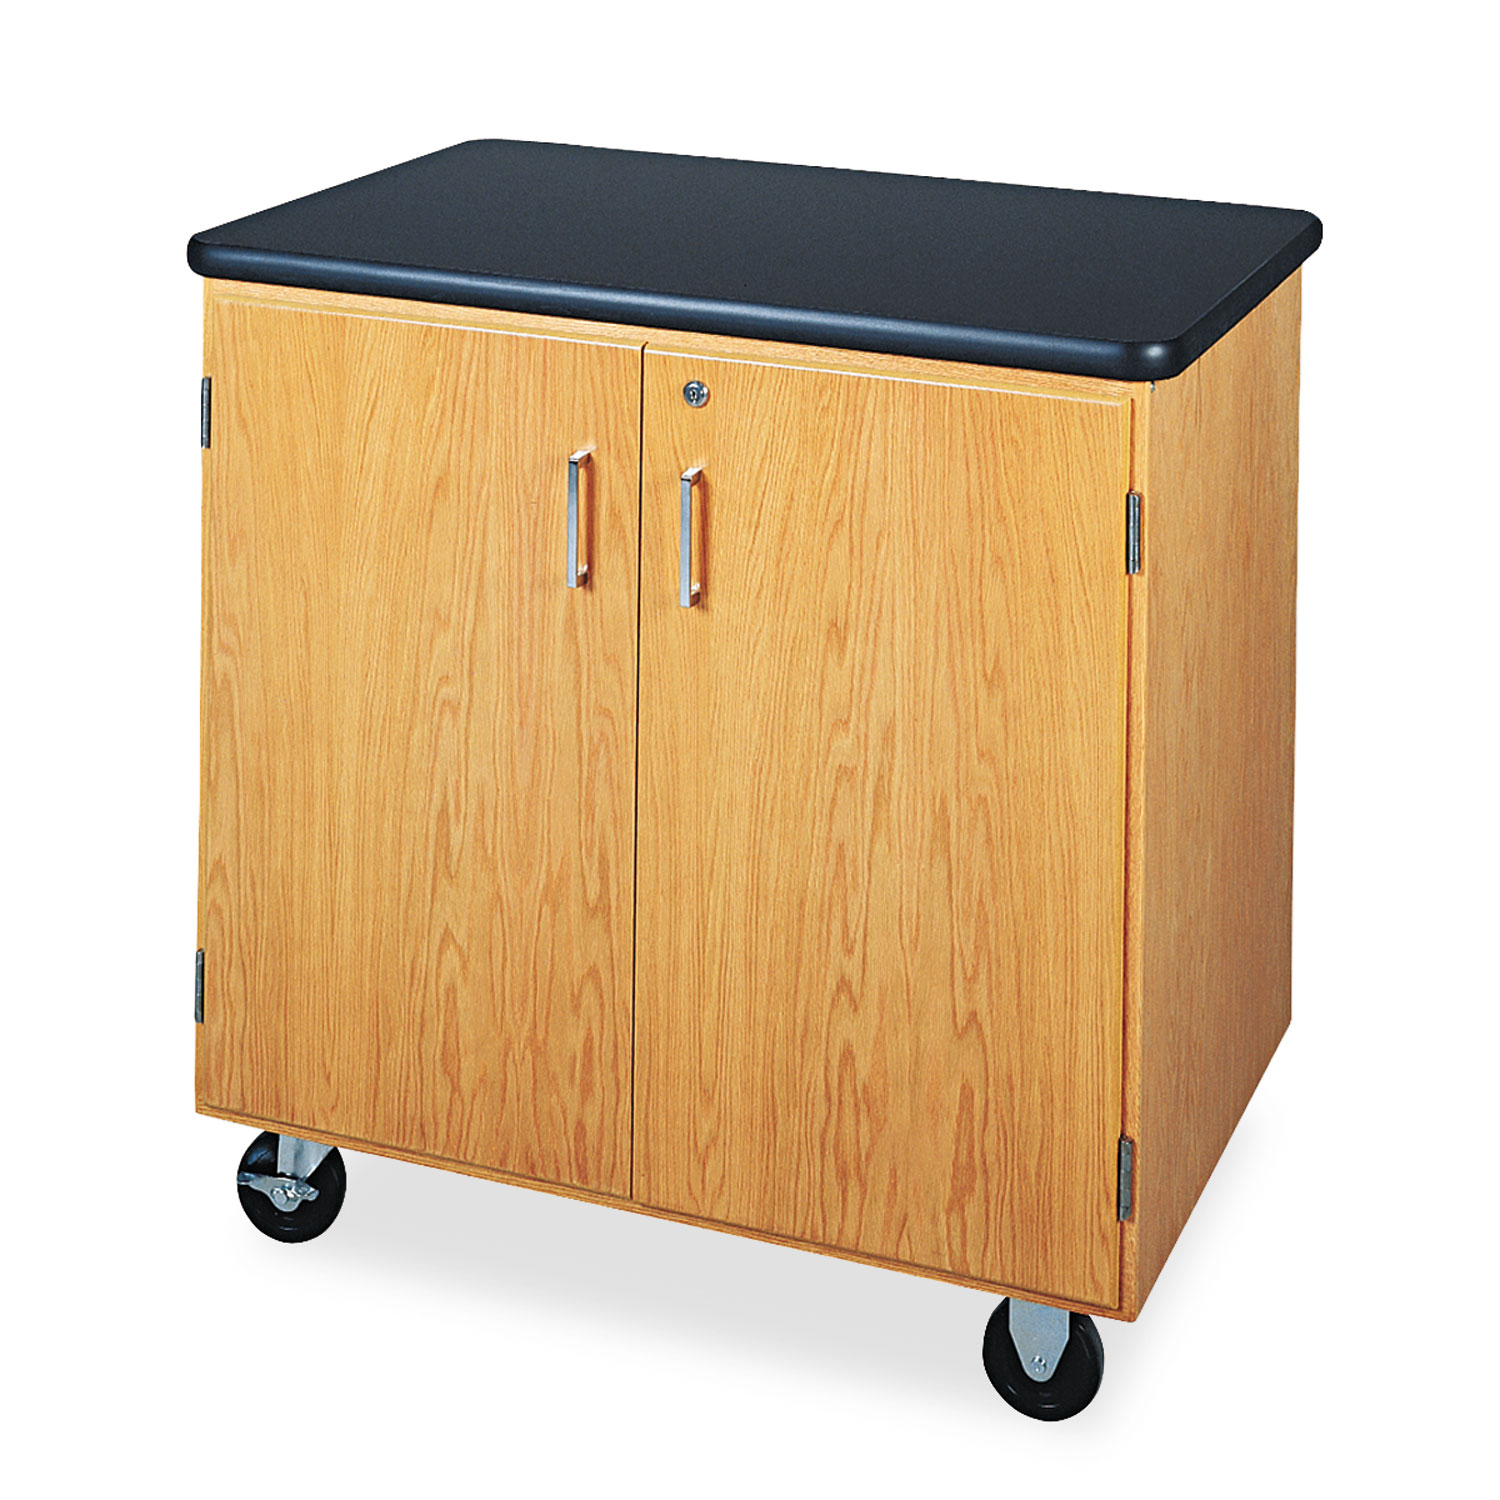  Diversified Woodcrafts 4401K Mobile Storage Cabinet, 36w x 24d x 36h, Black/Oak (DVW4401K) 